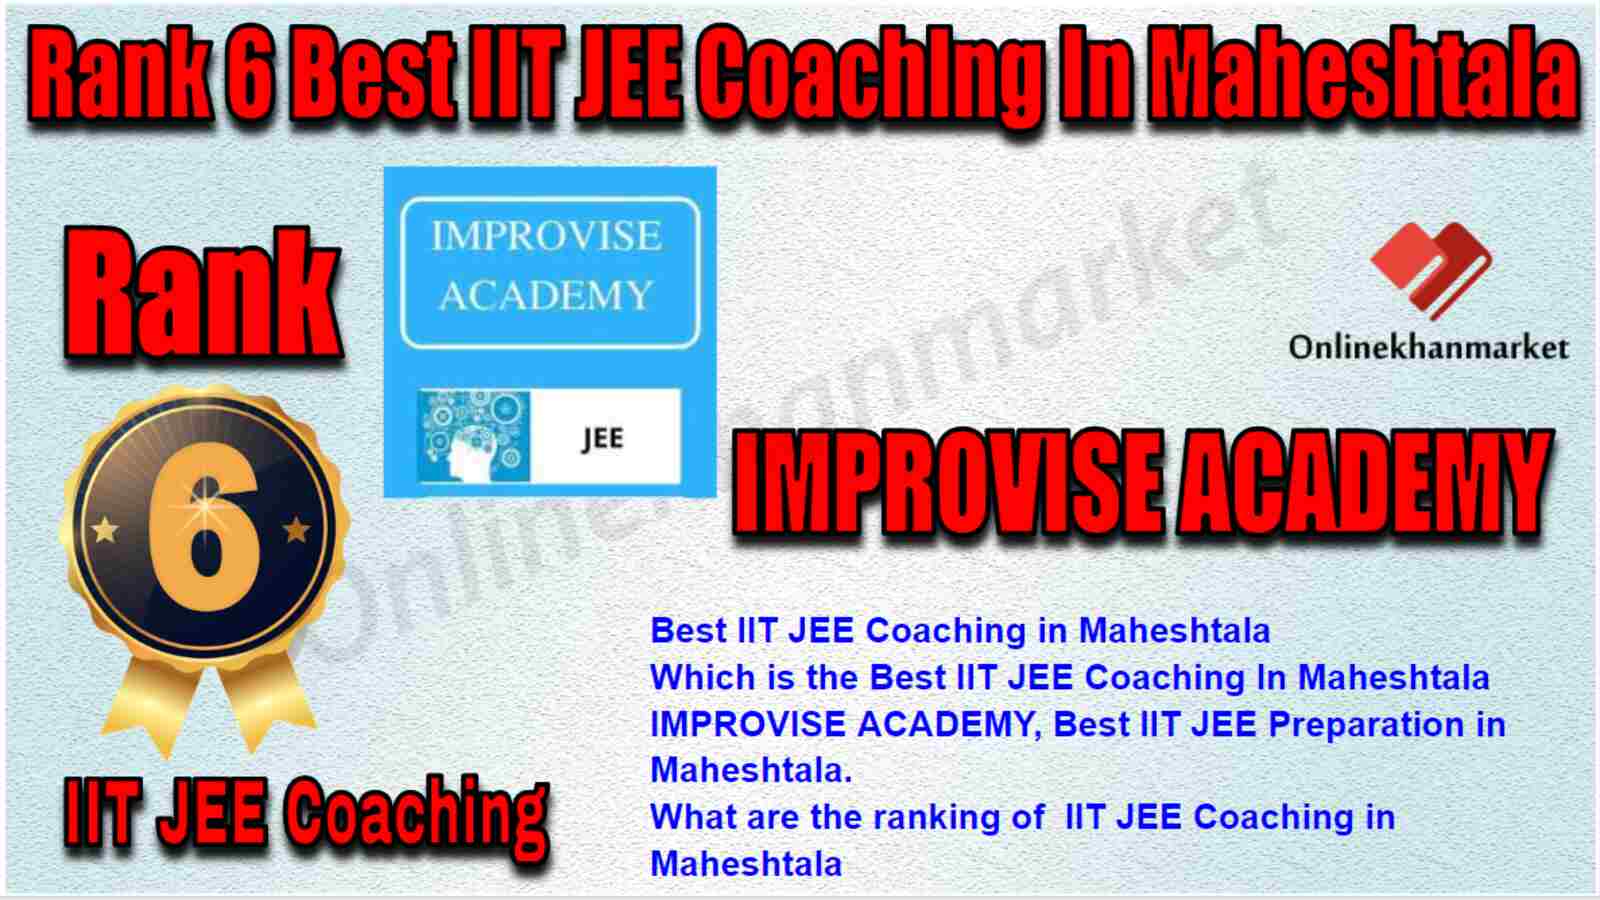 Rank 6 Best IIT JEE Coaching in Maheshtala